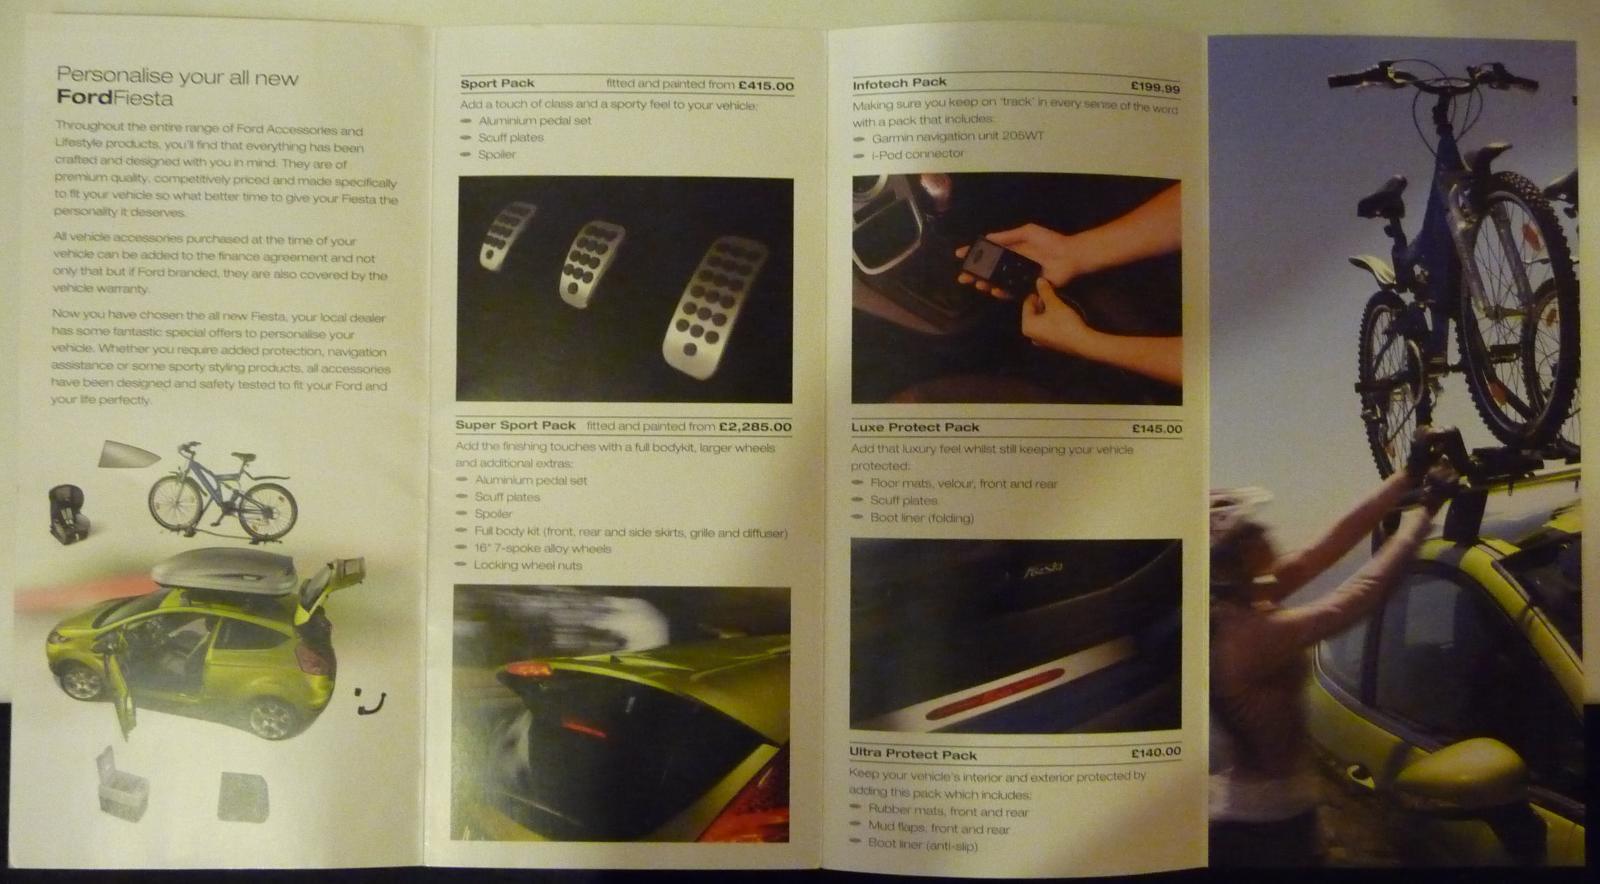 Ford Fiesta Accessory Brochure 2009 Part 1